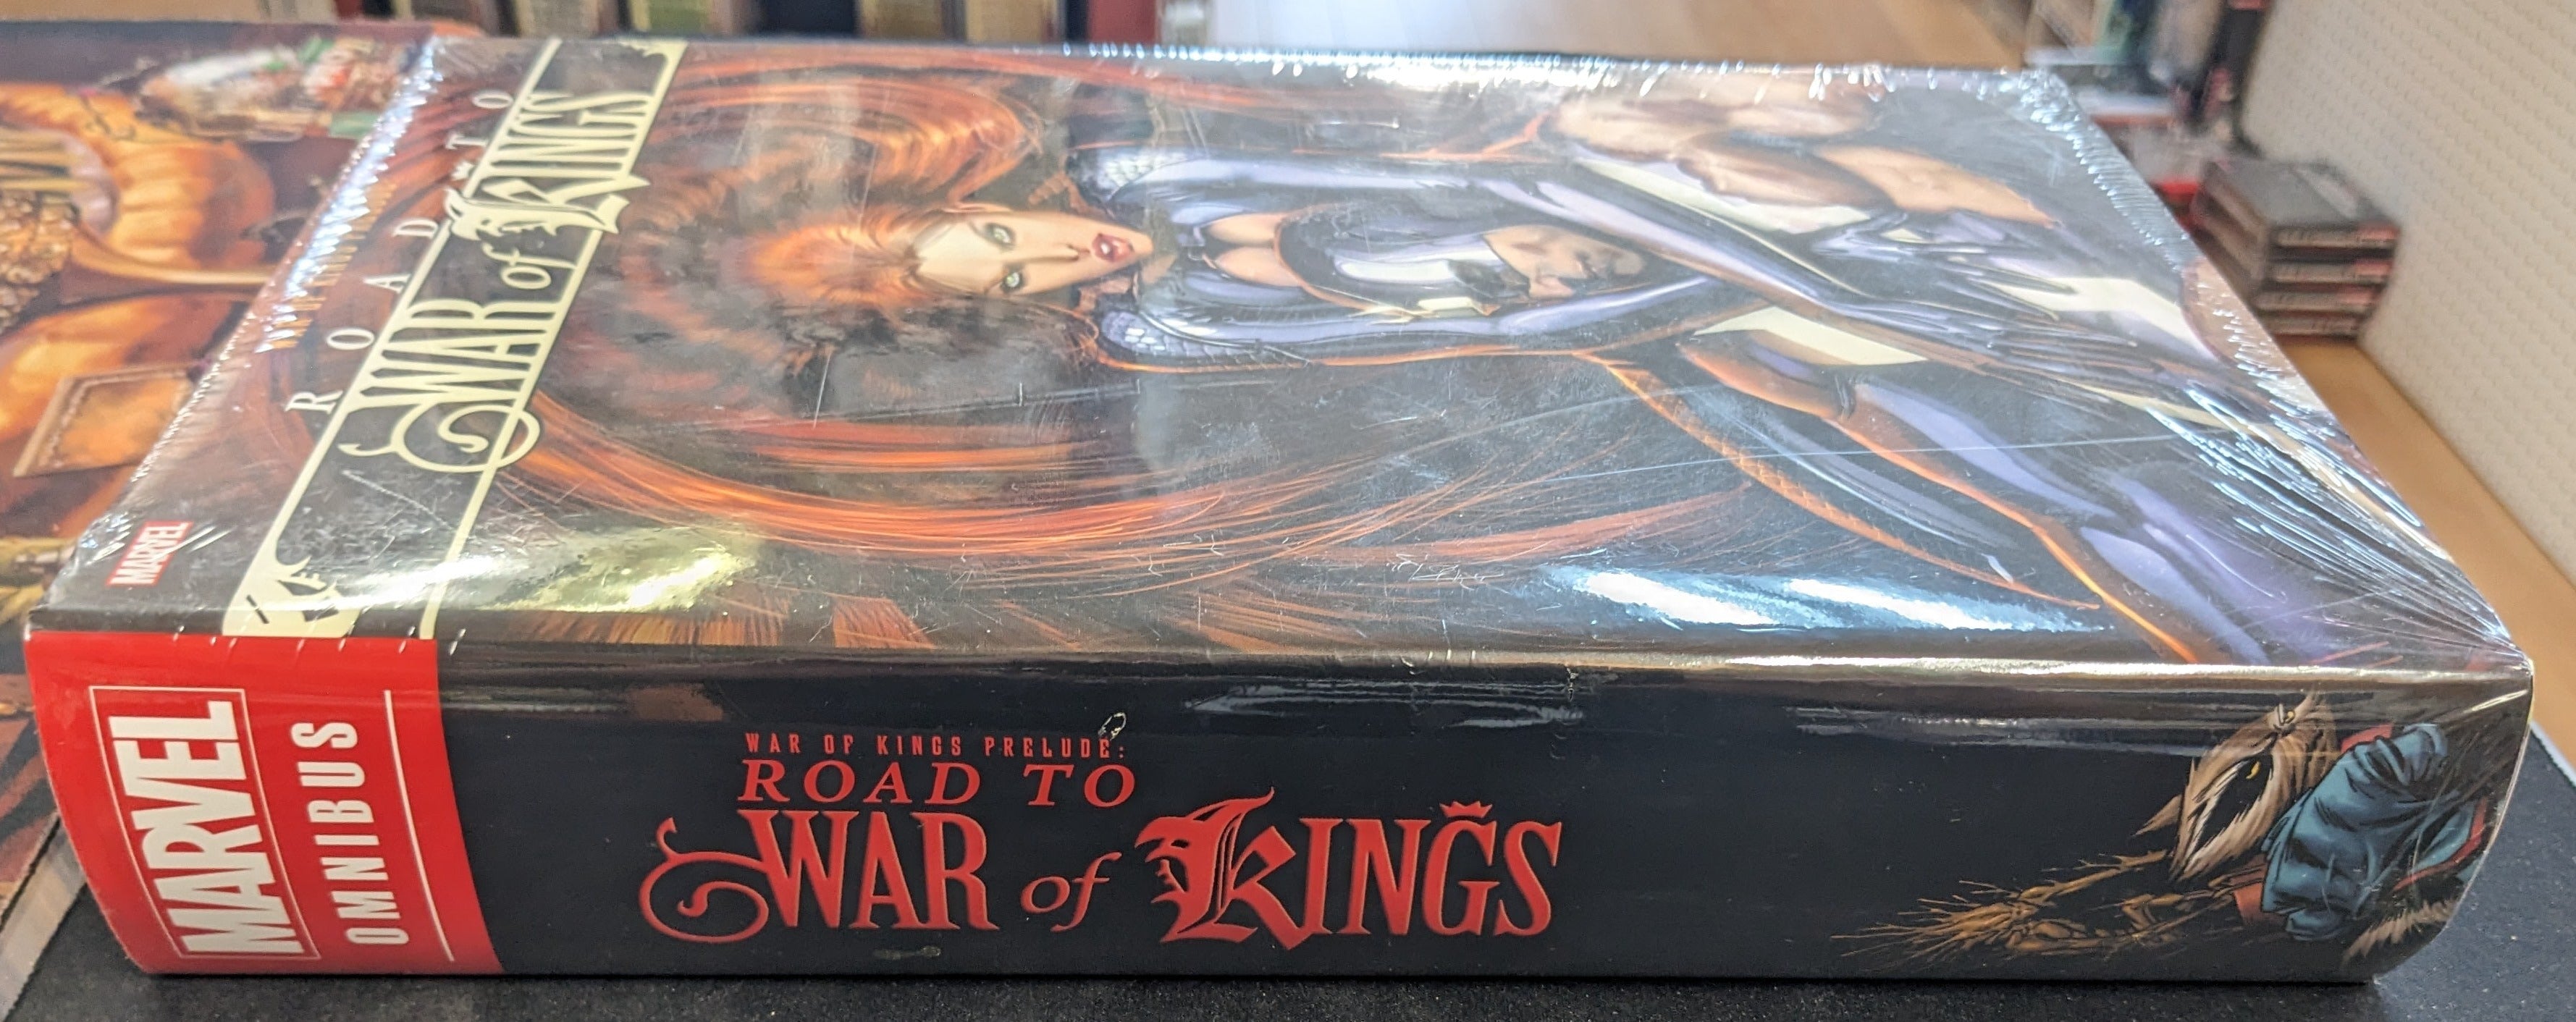 War Of Kings Prelude Hardcover Road To War Of Kings Omnibus | BD Cosmos